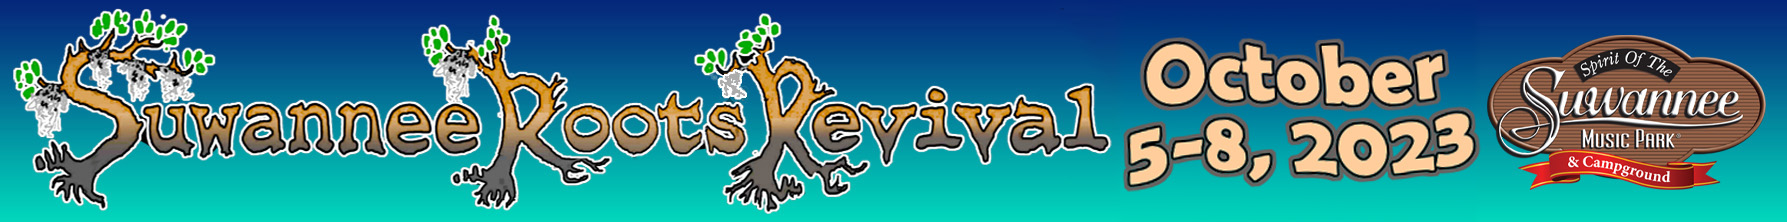 Suwannee Roots Revival™| Oct 5 – 8, 2023